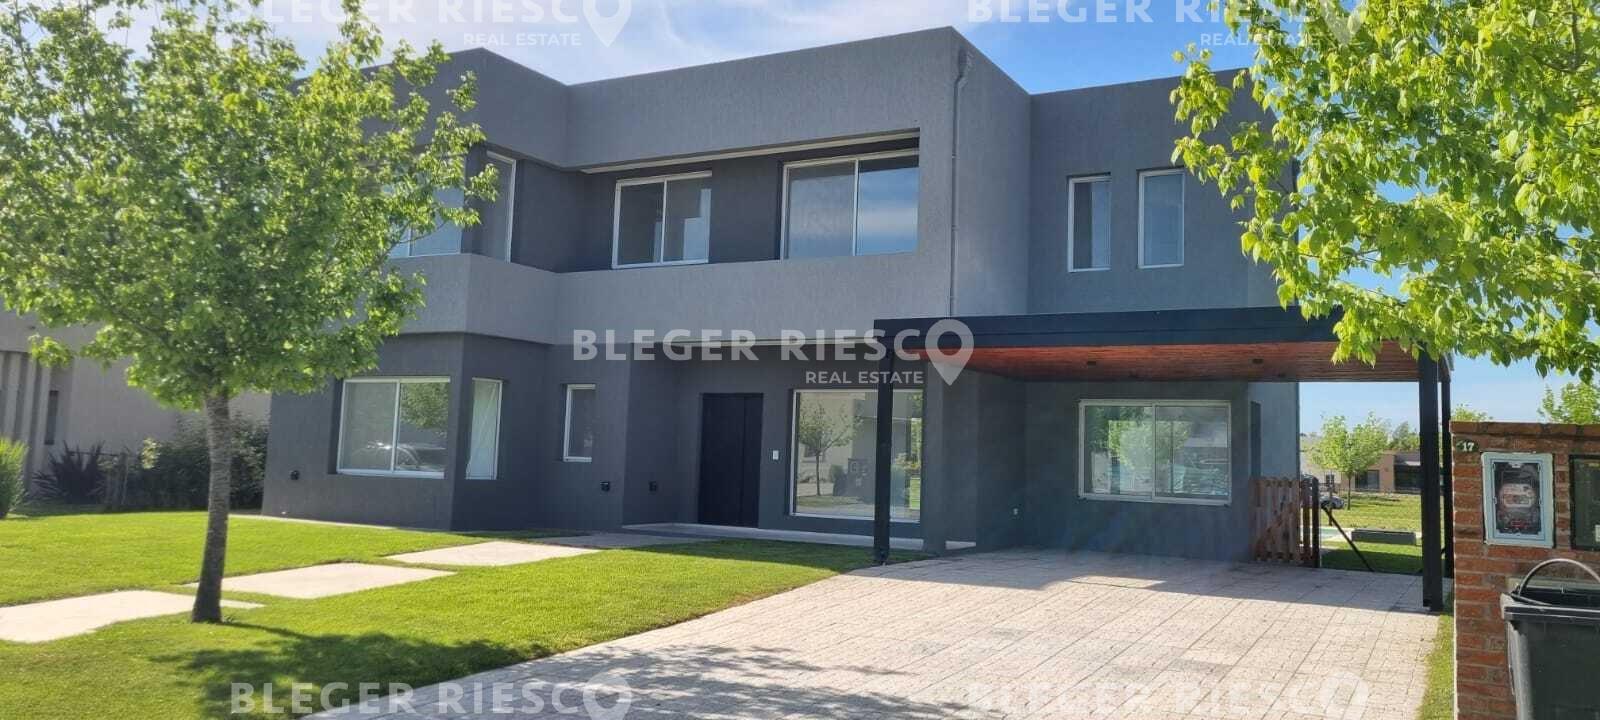 #3300999 | Sale | House | Acacias Blancas (Bleger-Riesco Real State)